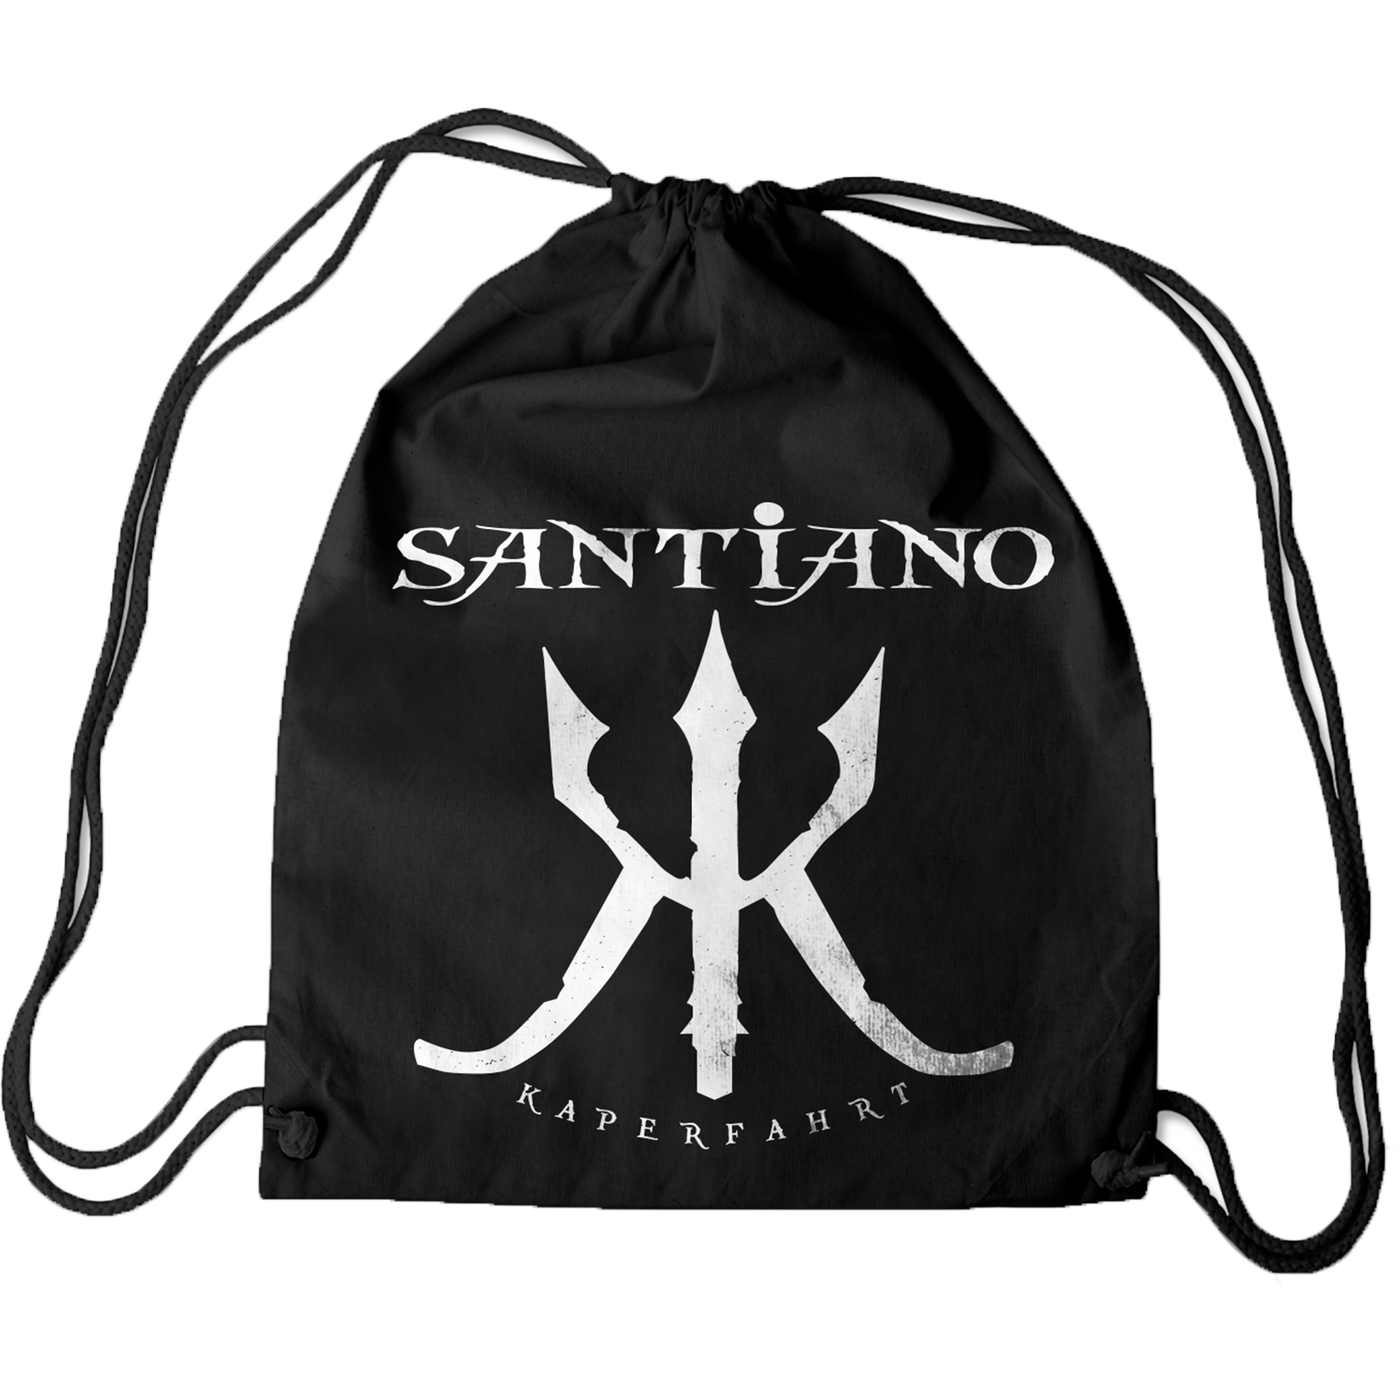 Santiano Matchbag 'Kaperfahrt'